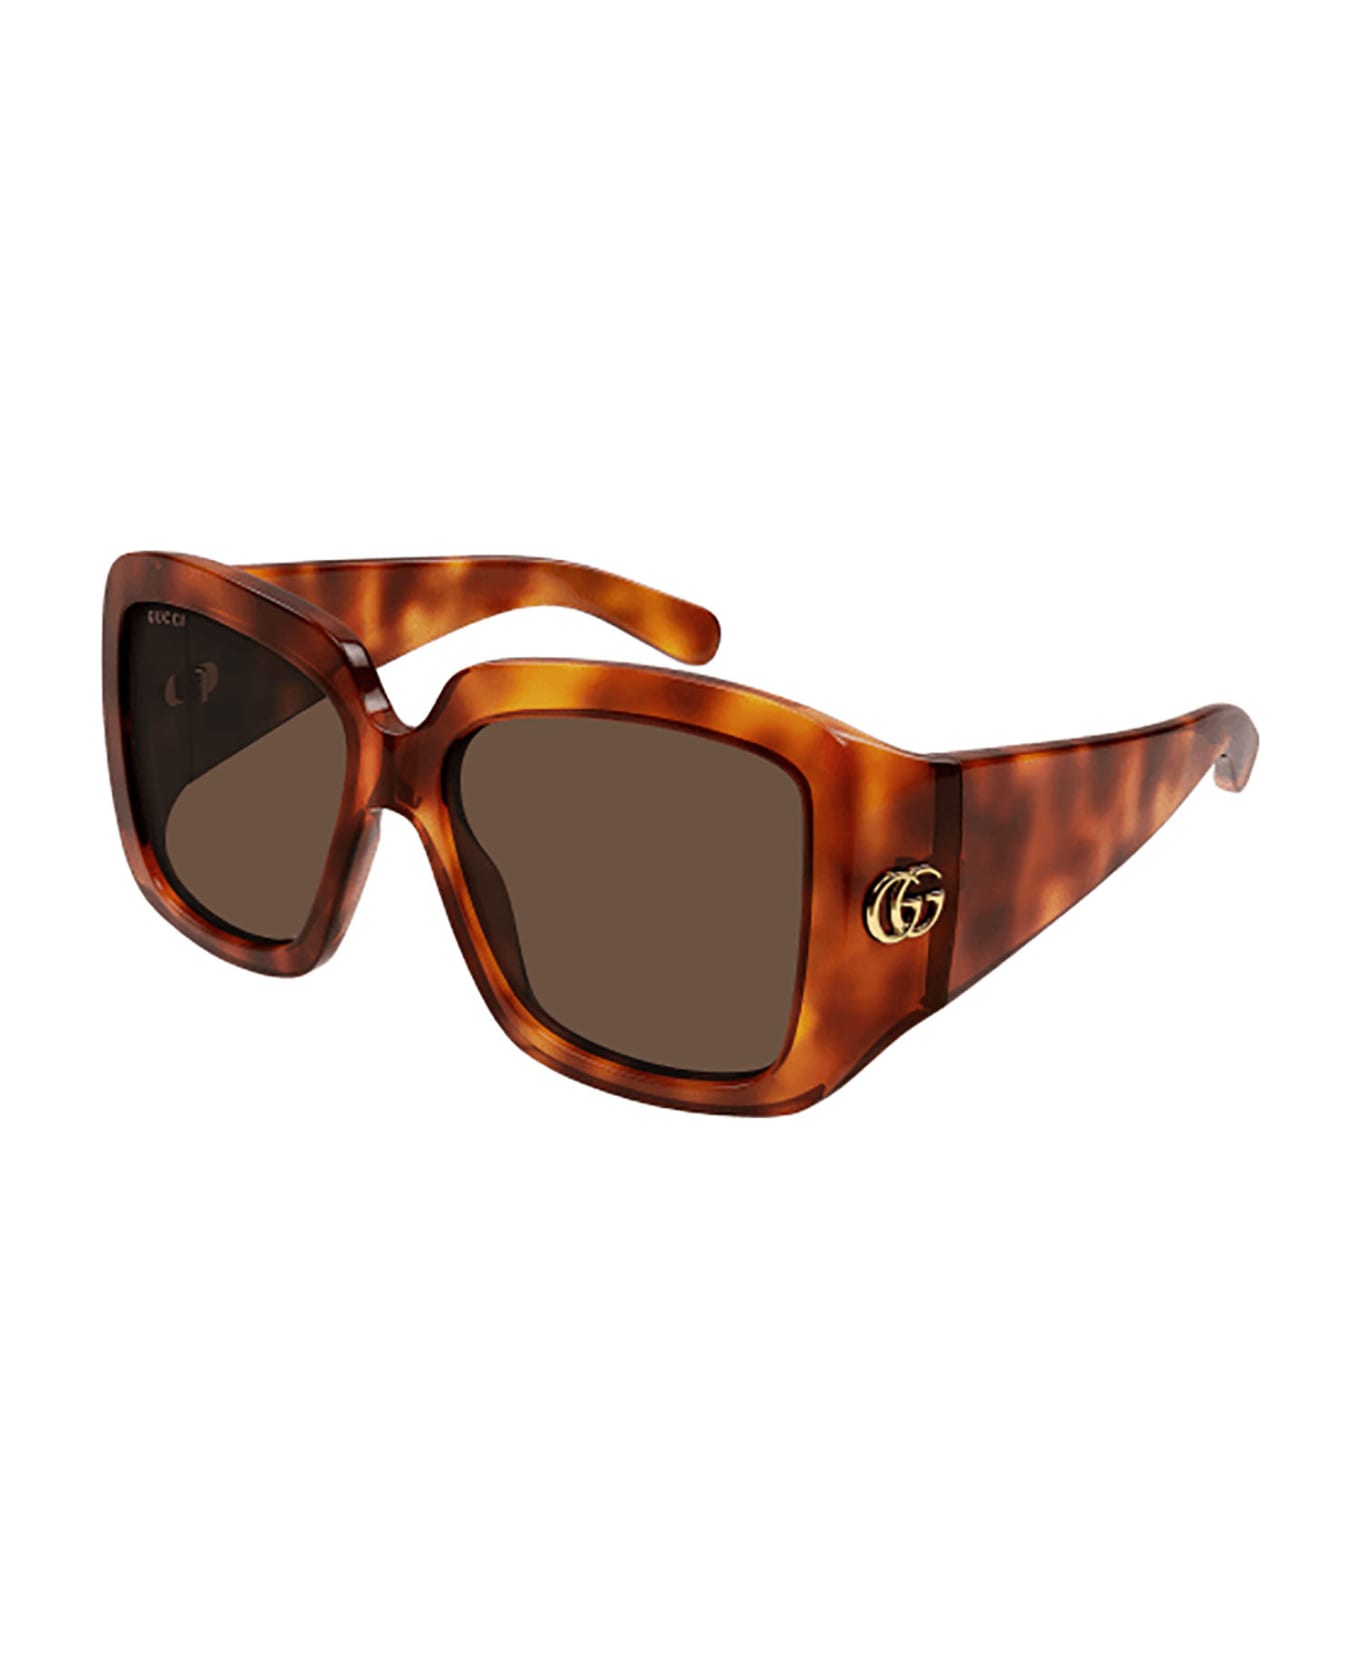 Gucci Eyewear GG1402S Sunglasses - Havana Havana Brown